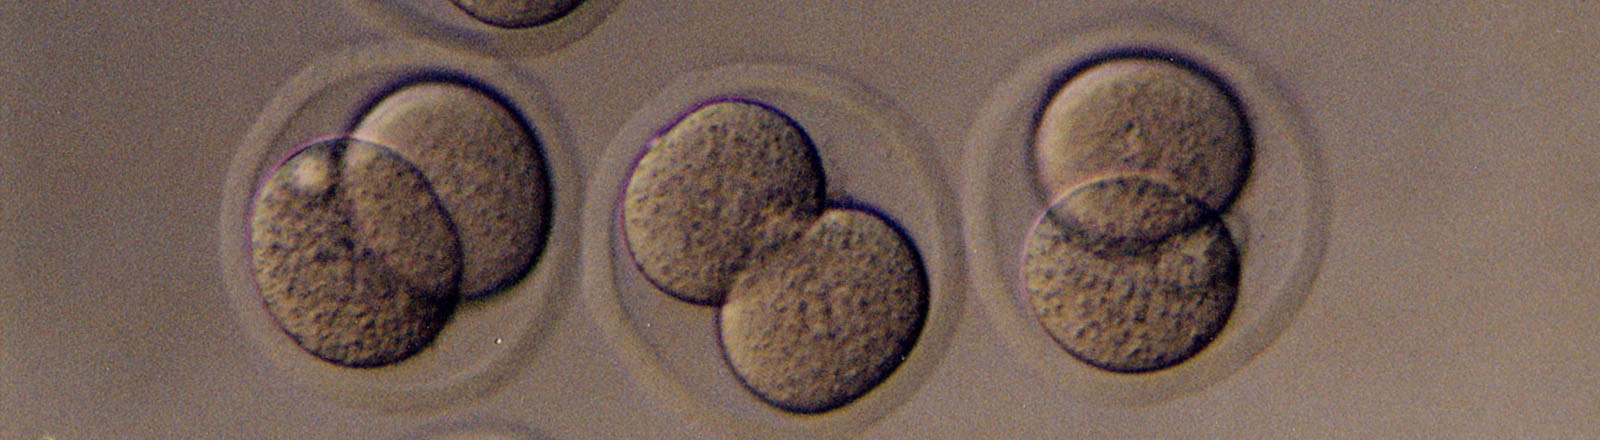 Biology embryo image